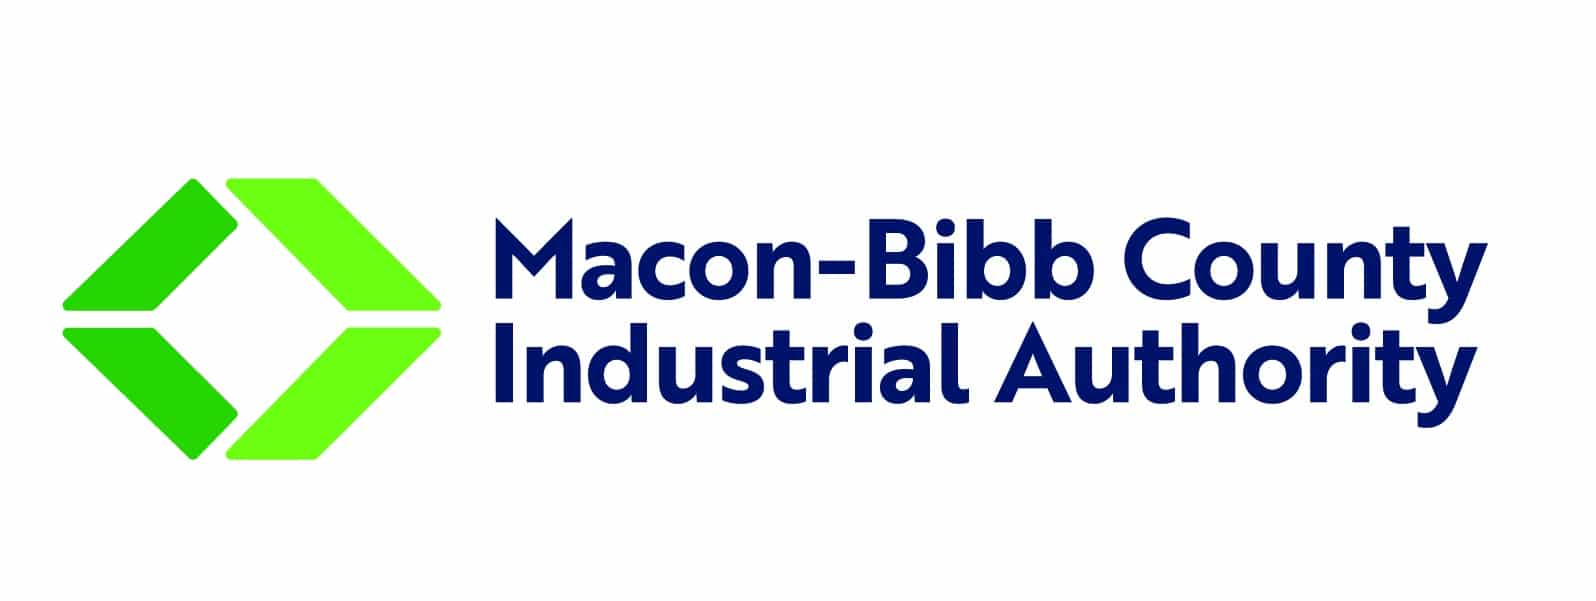 Macon-Bibb County Industrial Authority 